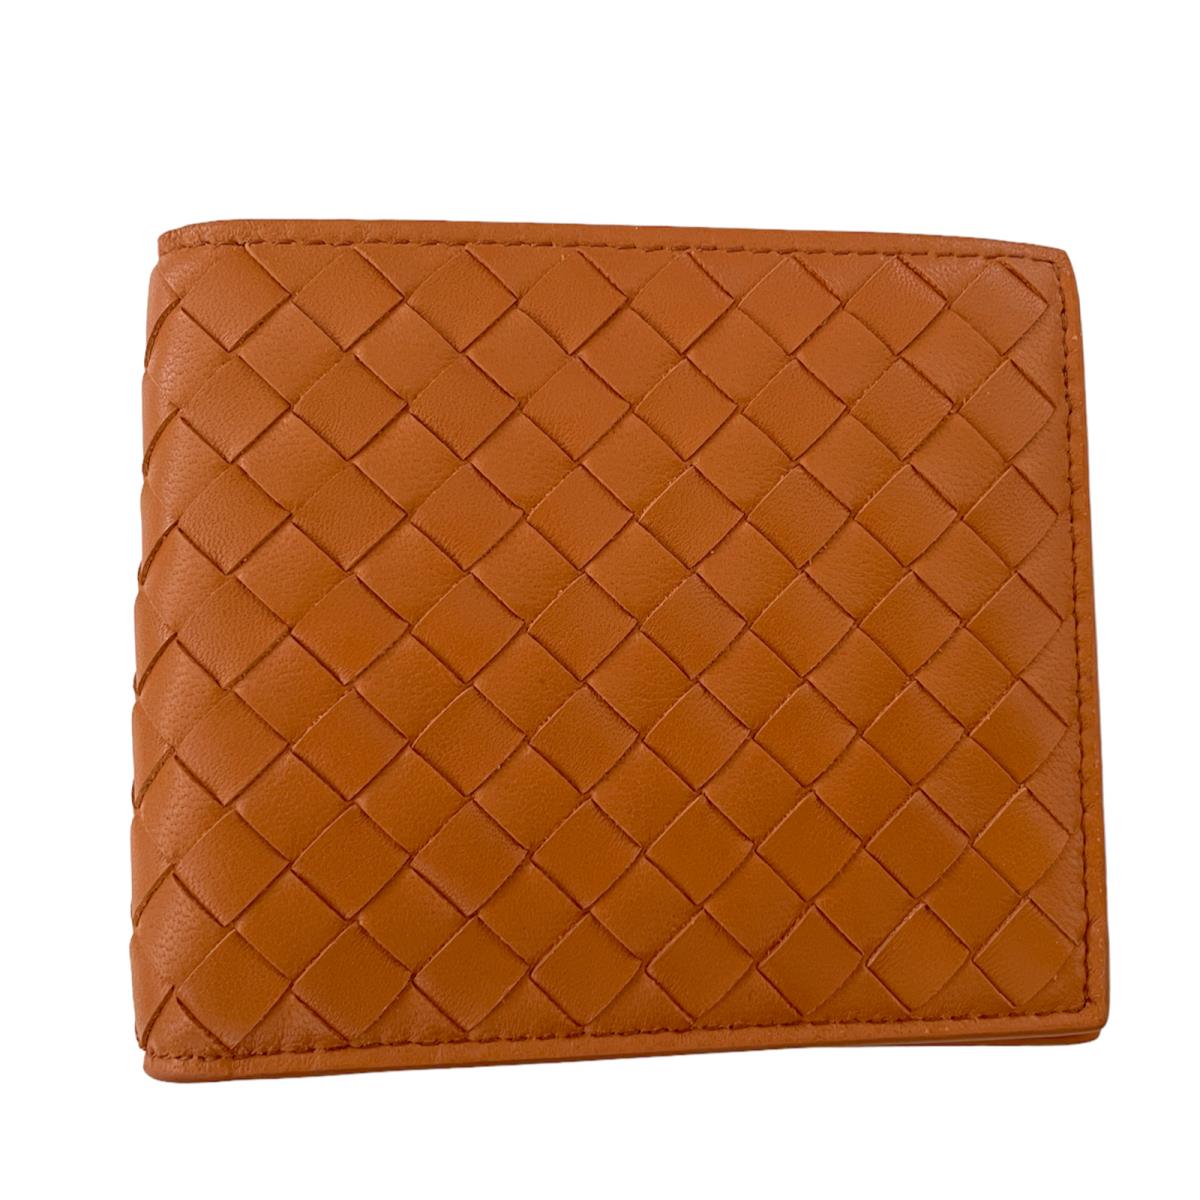 Bottega Veneta Mens Orange Leather Intrecciato Woven Bifold Wallet 196207